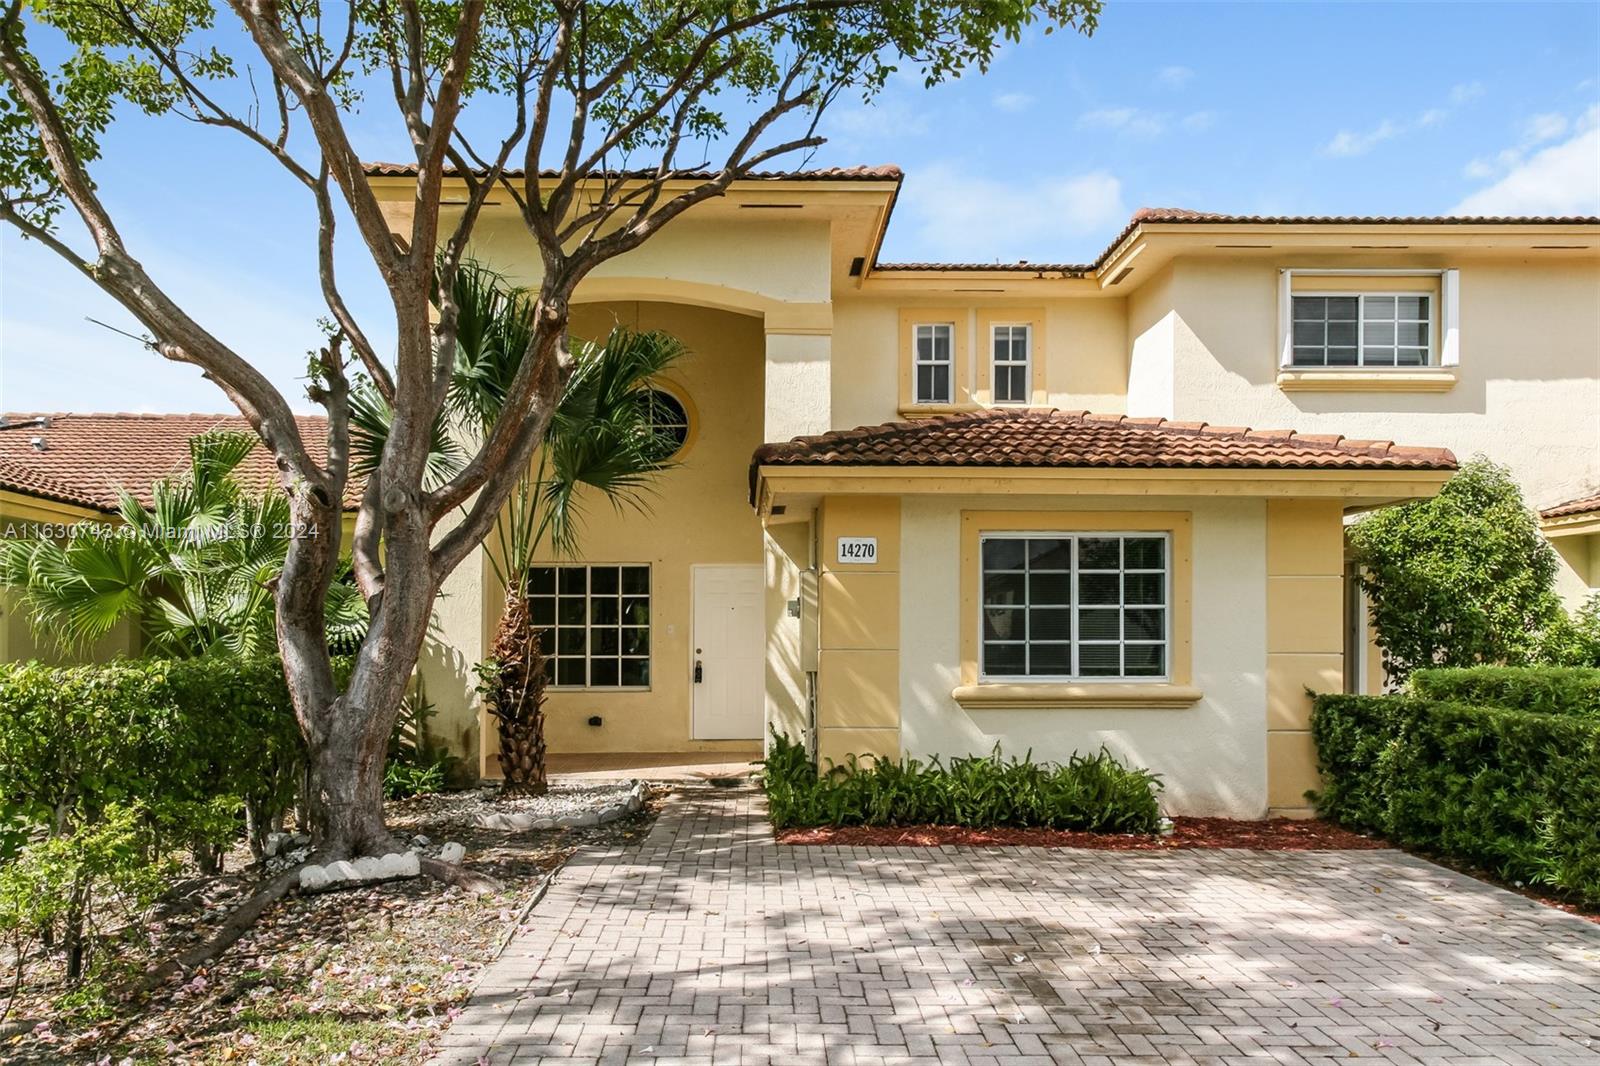 Rental Property at 14270 Sw 133rd Ave, Miami, Broward County, Florida - Bedrooms: 3 
Bathrooms: 2  - $2,590 MO.